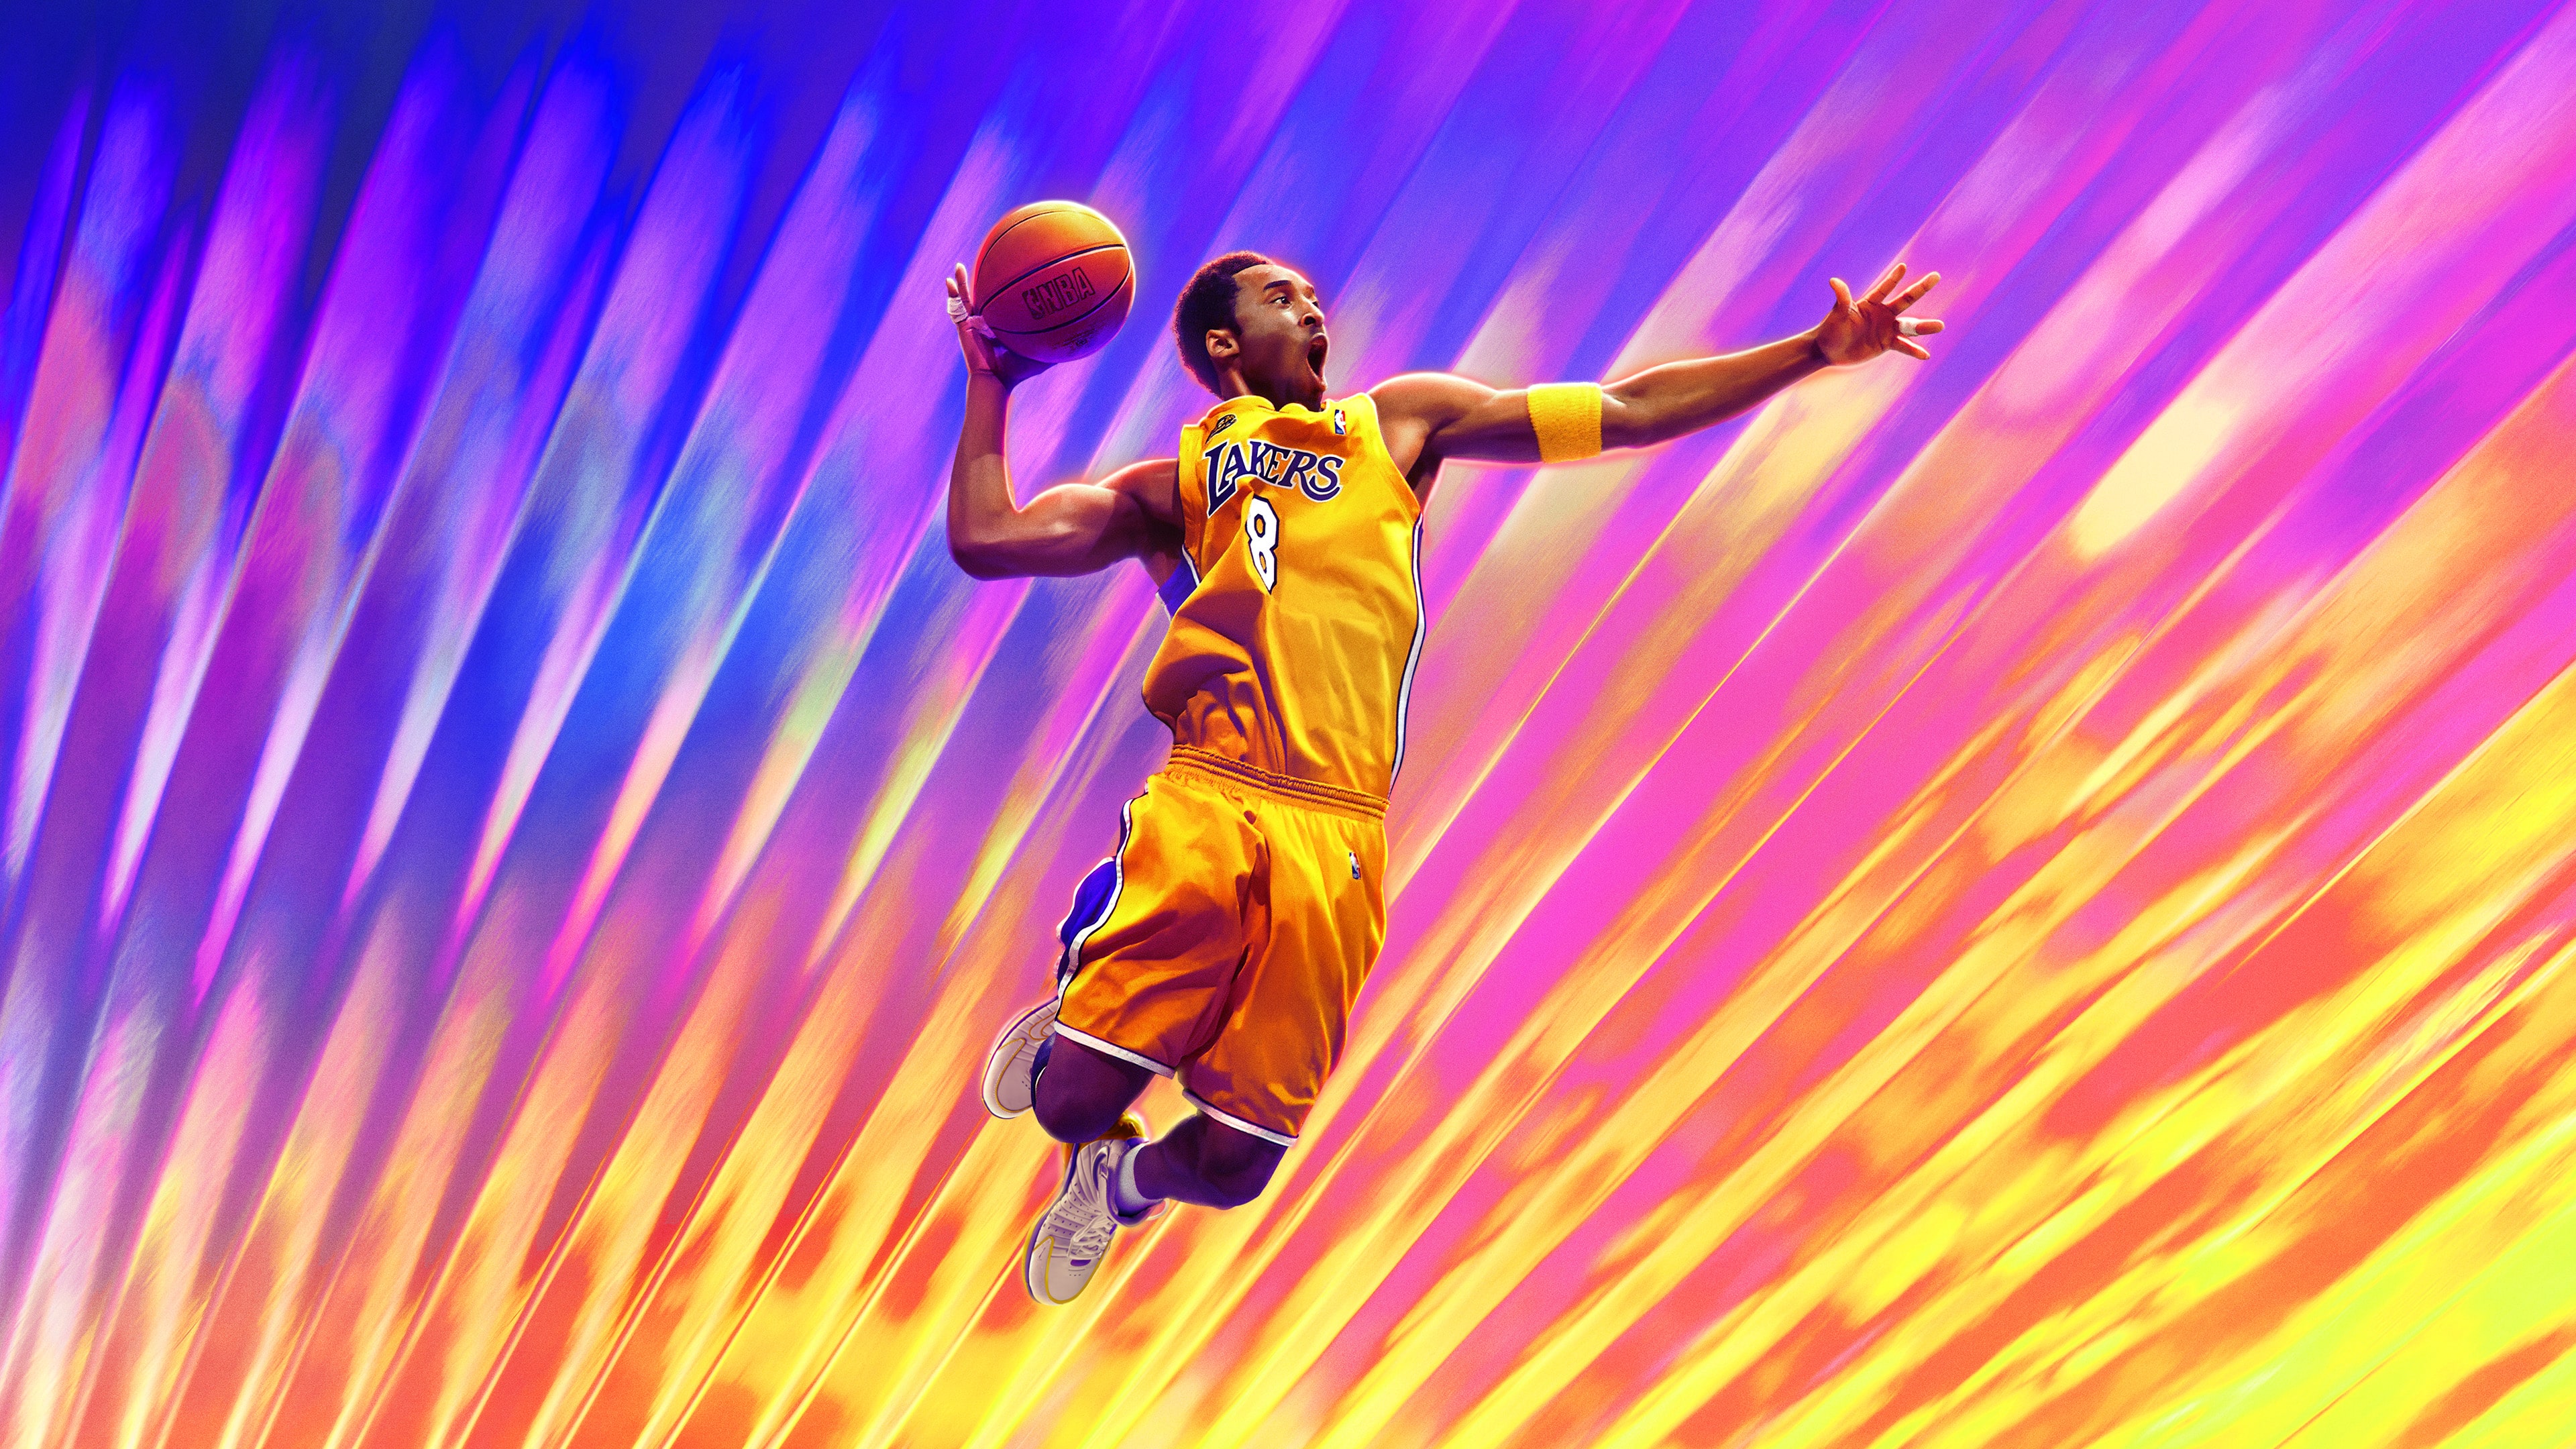 NBA 2K24 Kobe Bryant Edition for PS5™